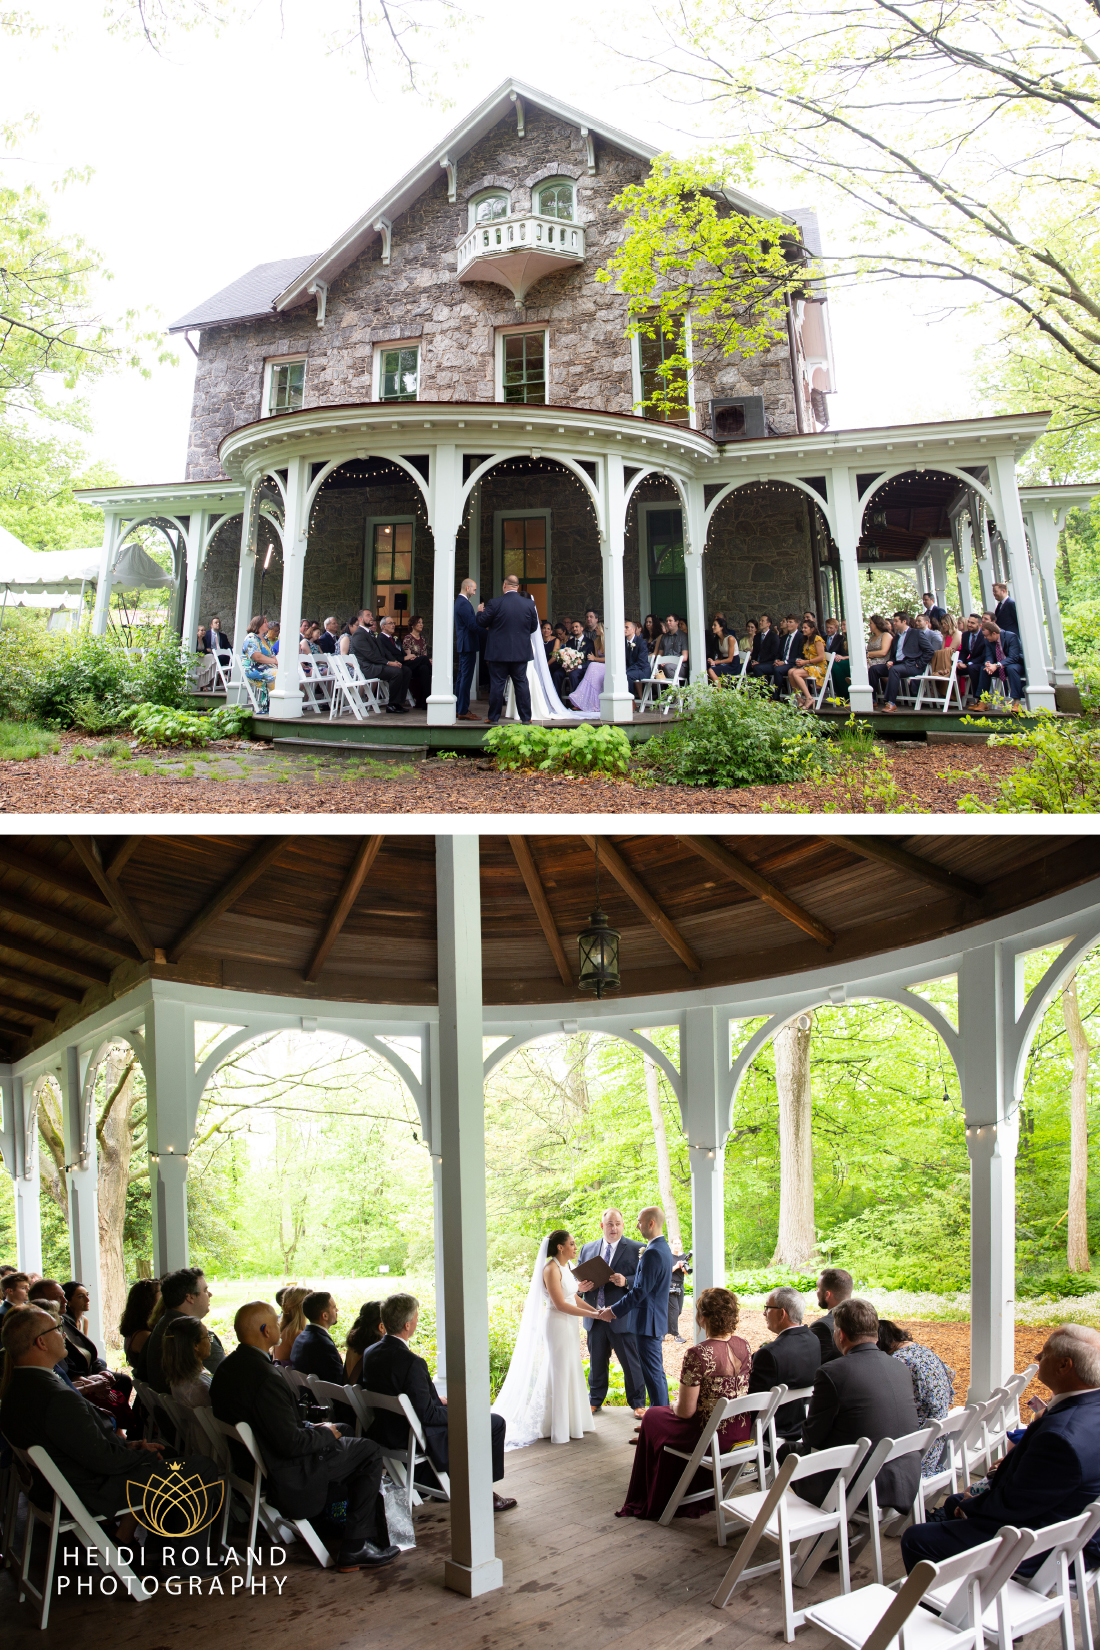 Wedding ceremony on the porch of Portico at Philadelphia's Awbury Arboretum